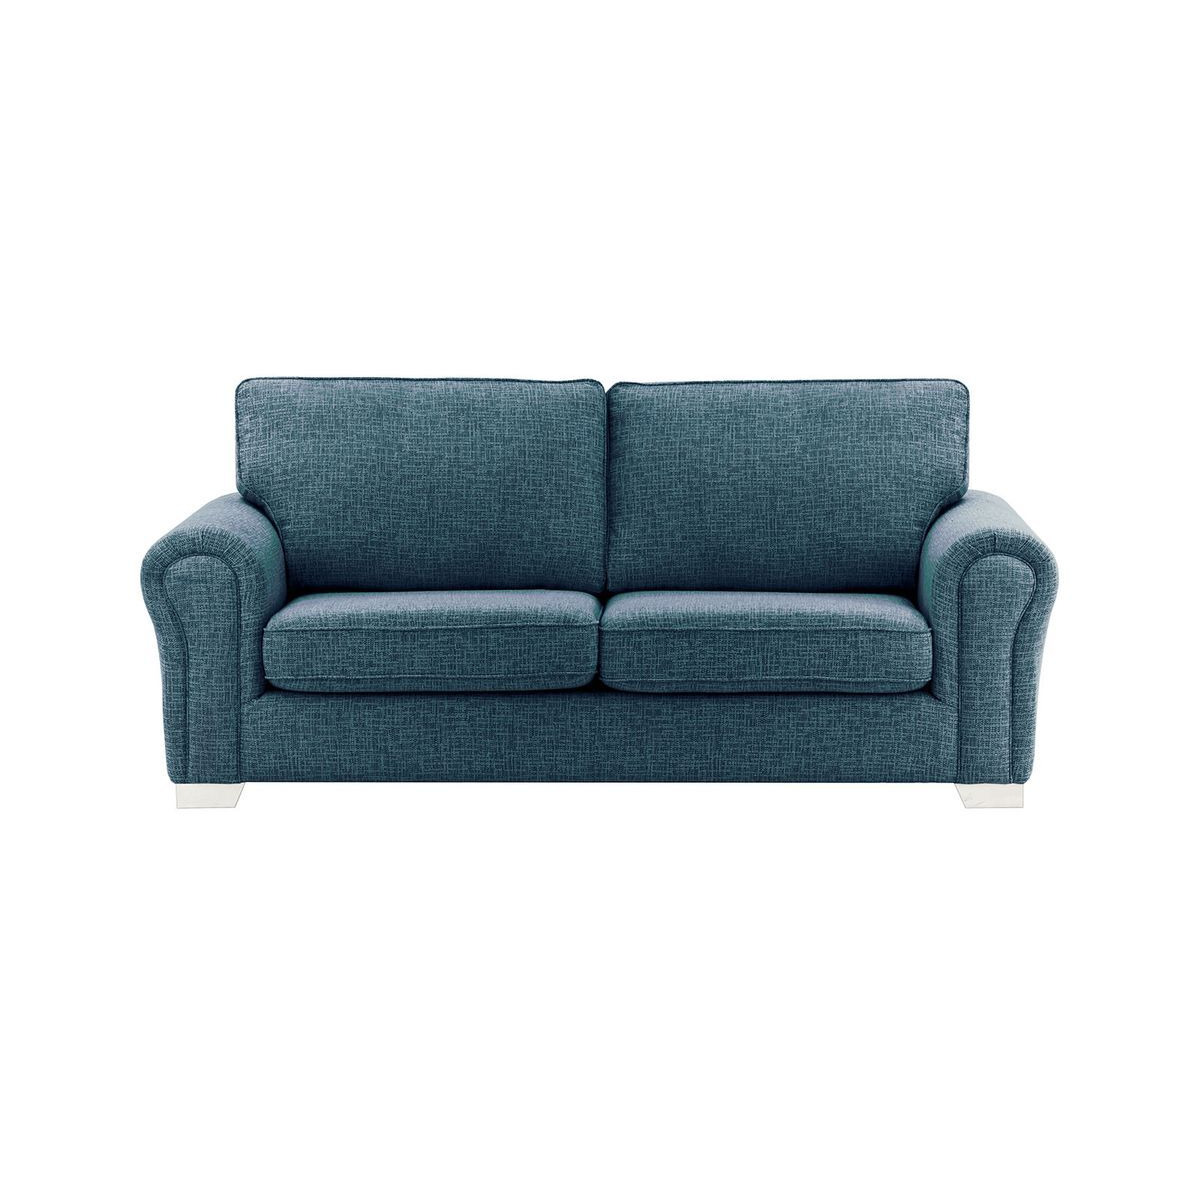 Bonna 3 Seater Sofa, teal, Leg colour: white - image 1